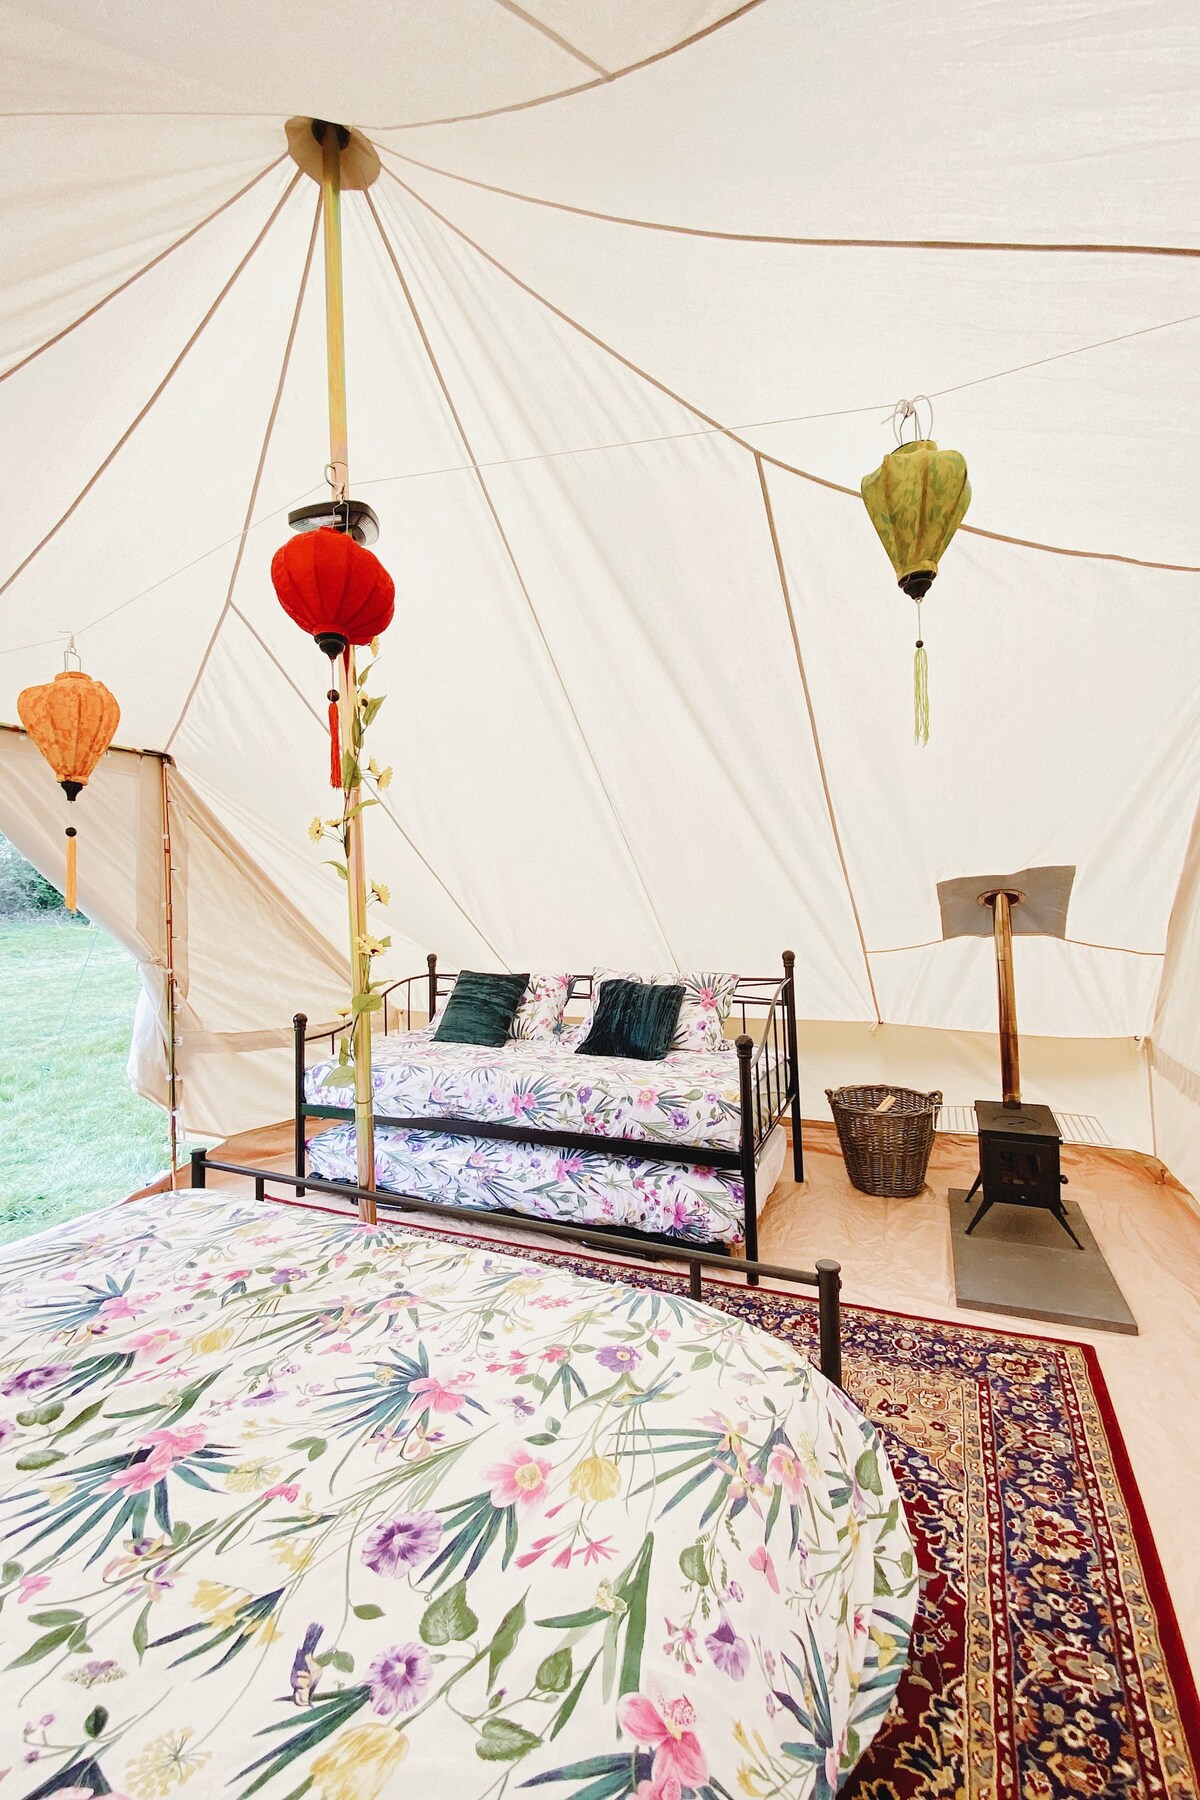 Touareg帐篷可容纳4人， 6人钟形帐篷， 2人入住。